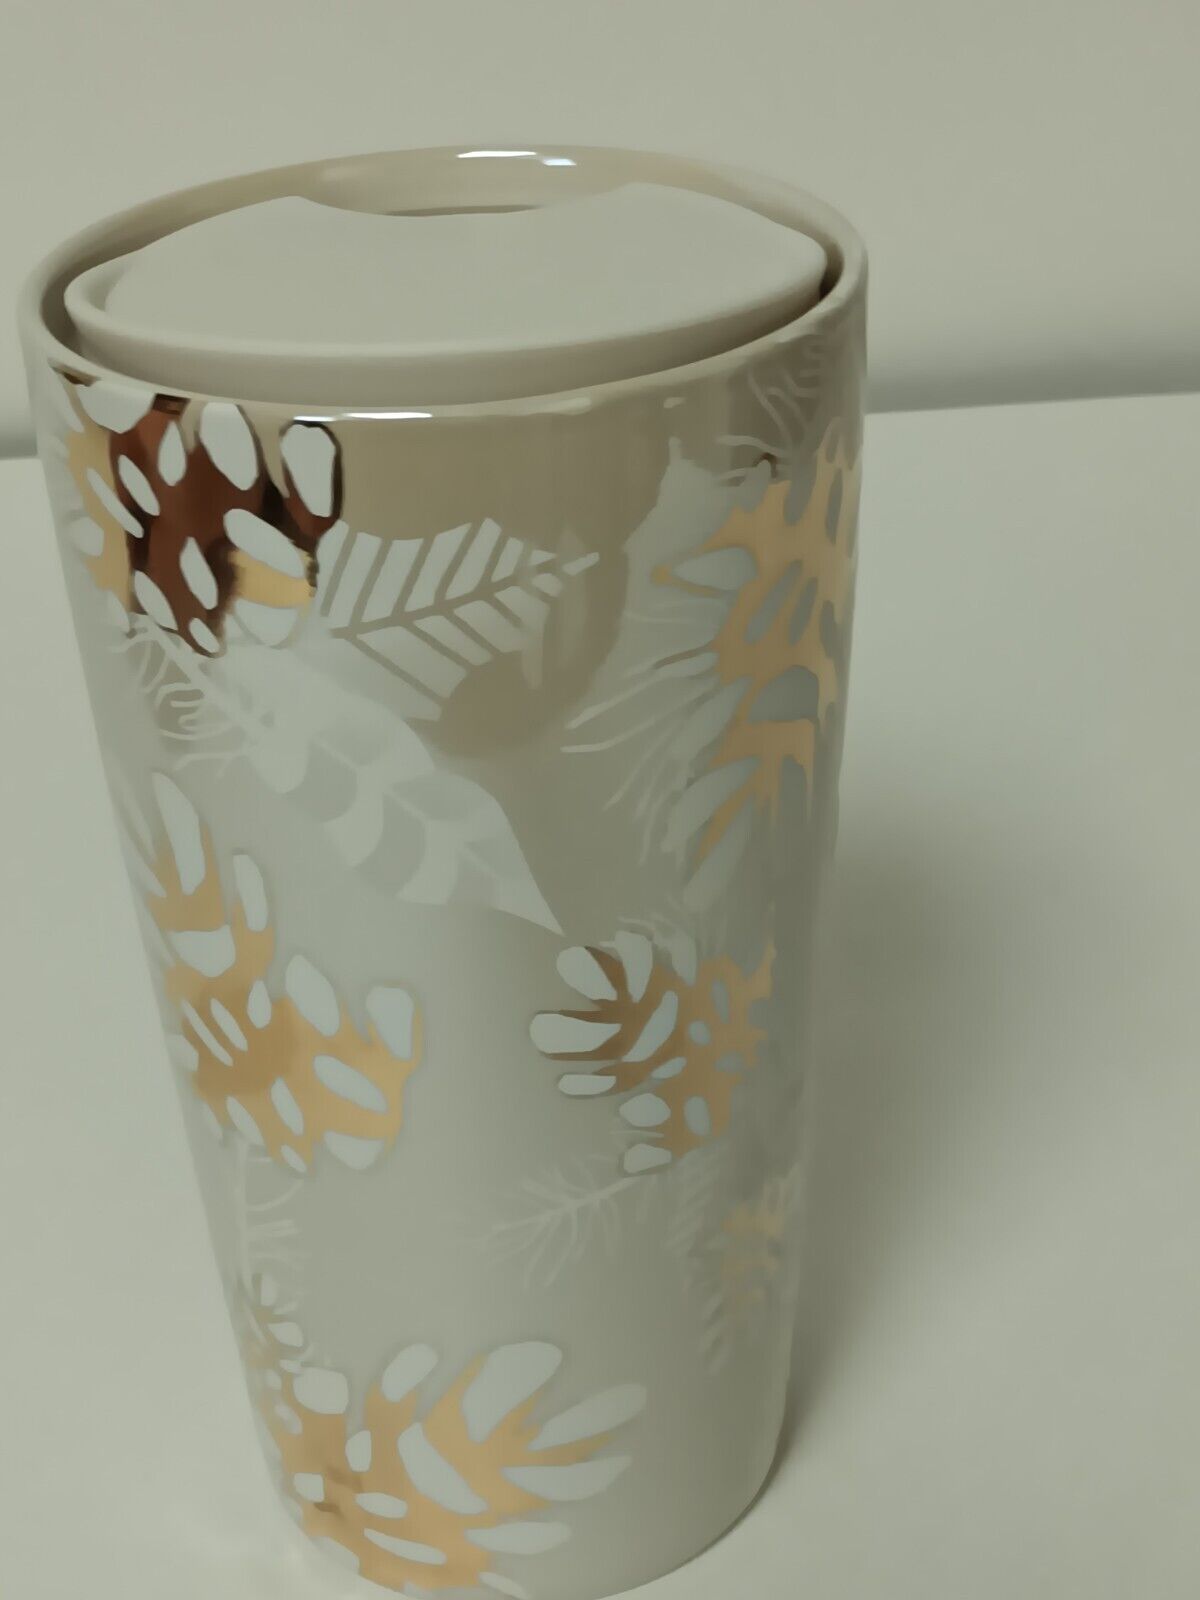 NEW 2020 Starbucks PINE CONE Ceramic Tumbler Holiday XMas 12 oz Gold Travel Mug